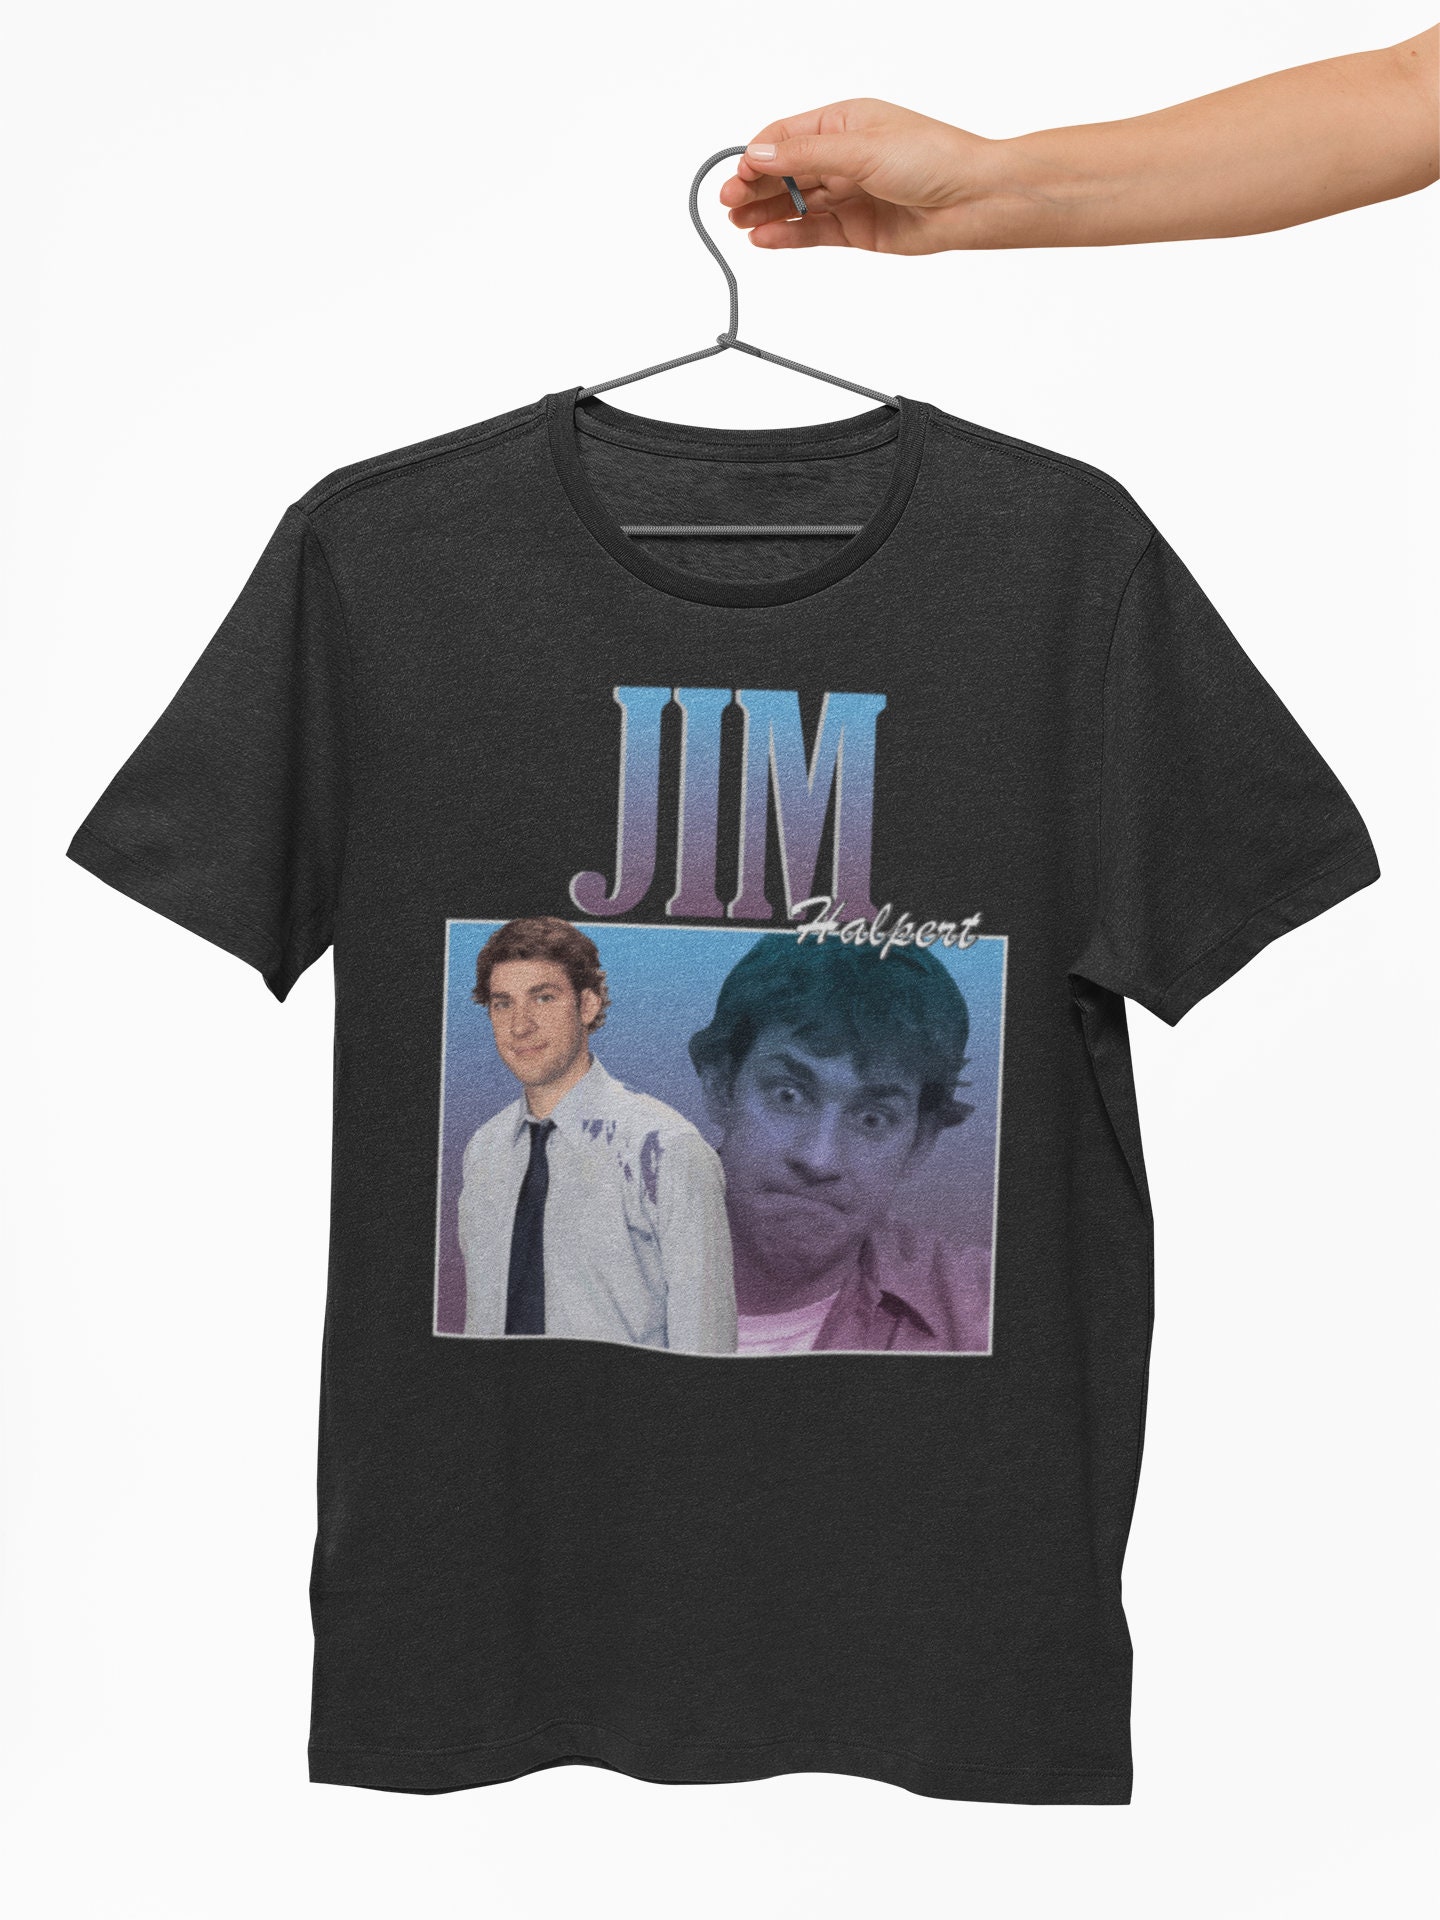 Jim Halpert T Shirt John Krasinski The Office Pam Beesly Gift4fan ...